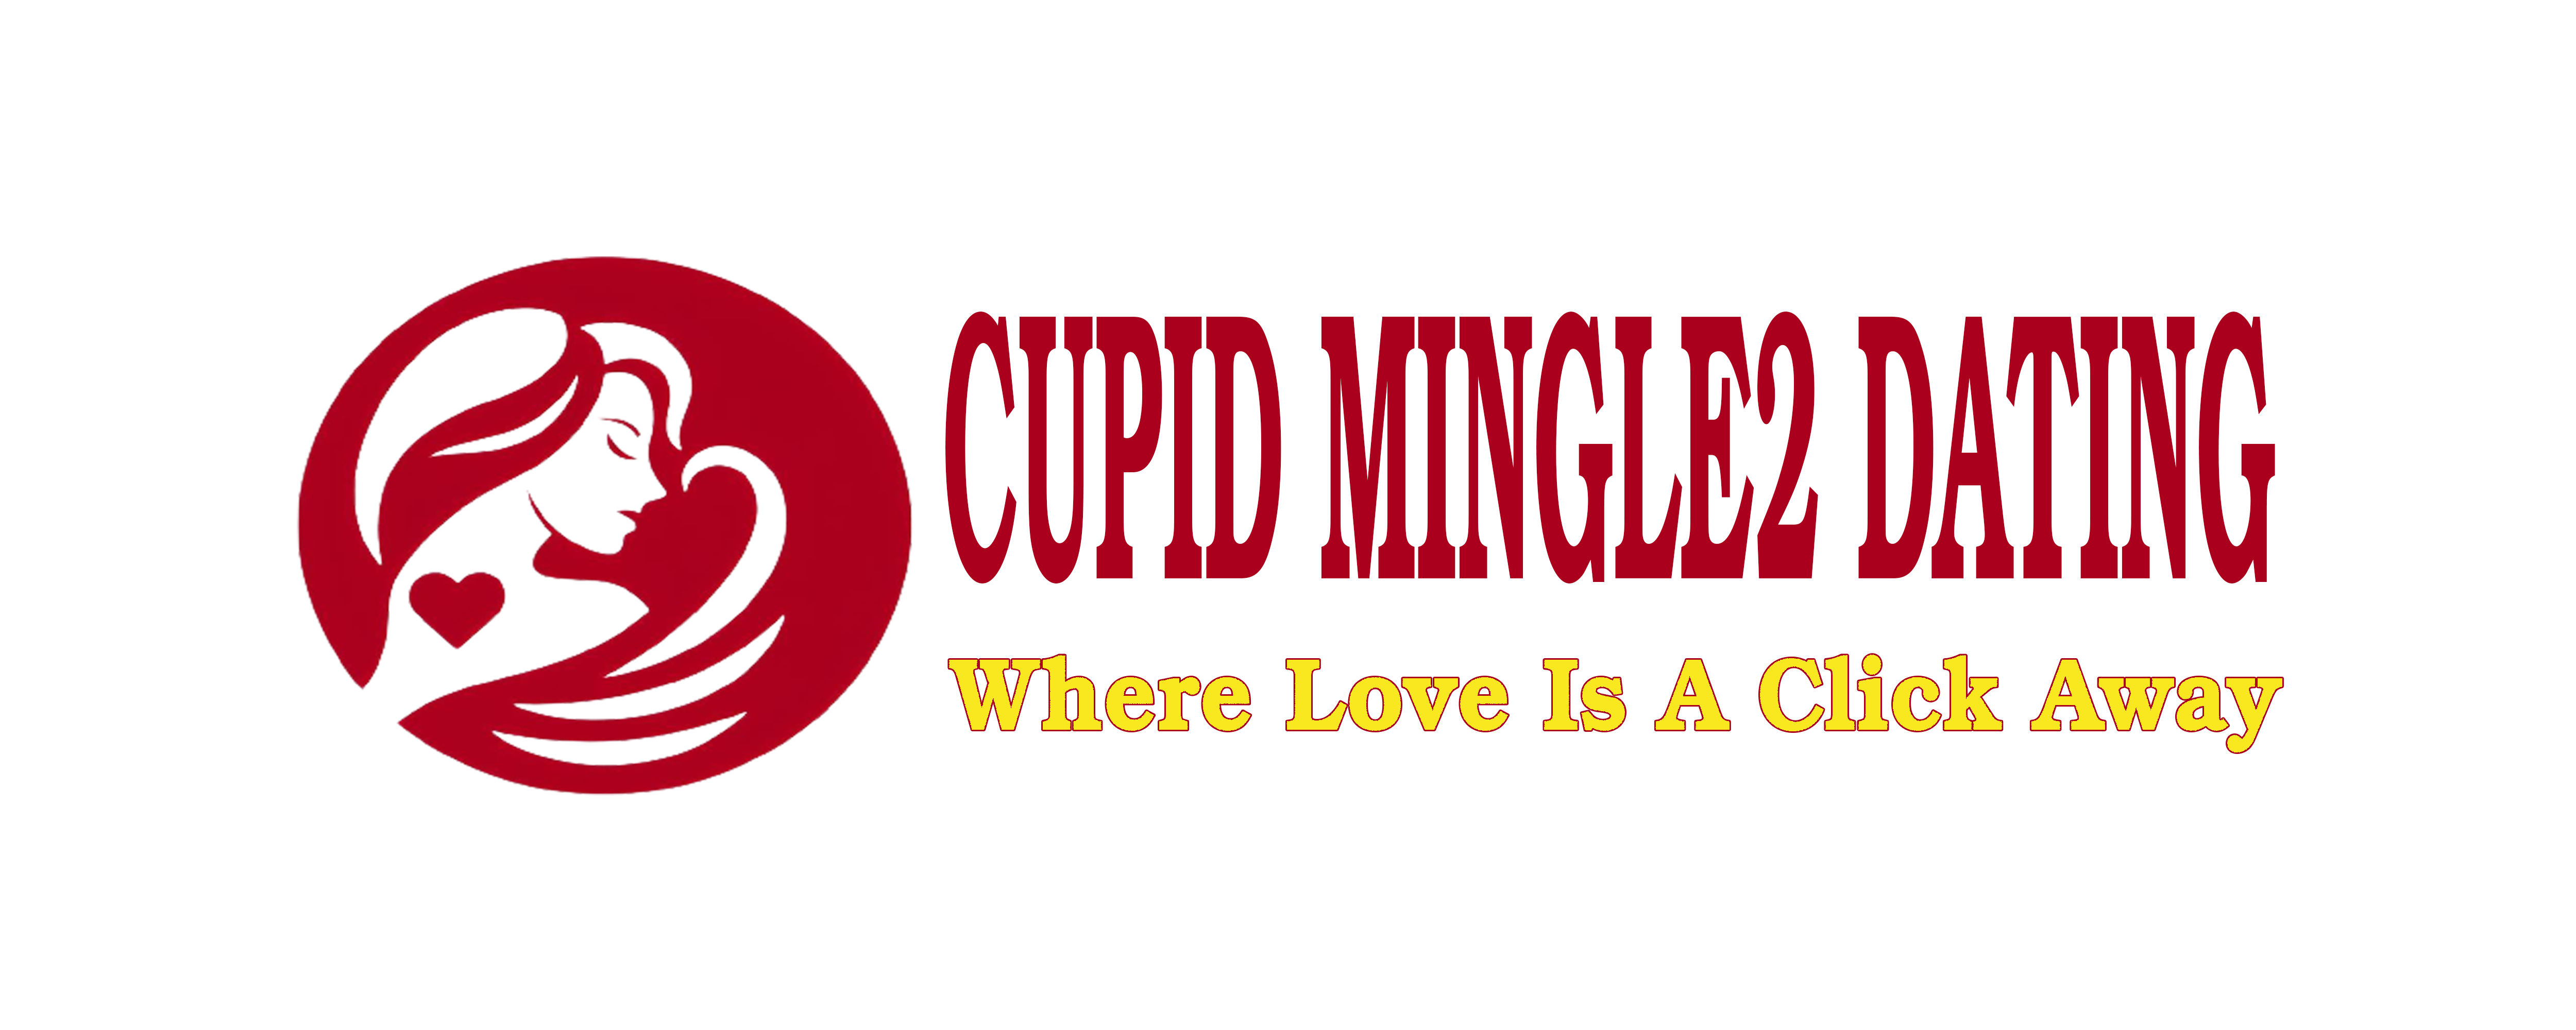 Cupid Mingle2 Dating